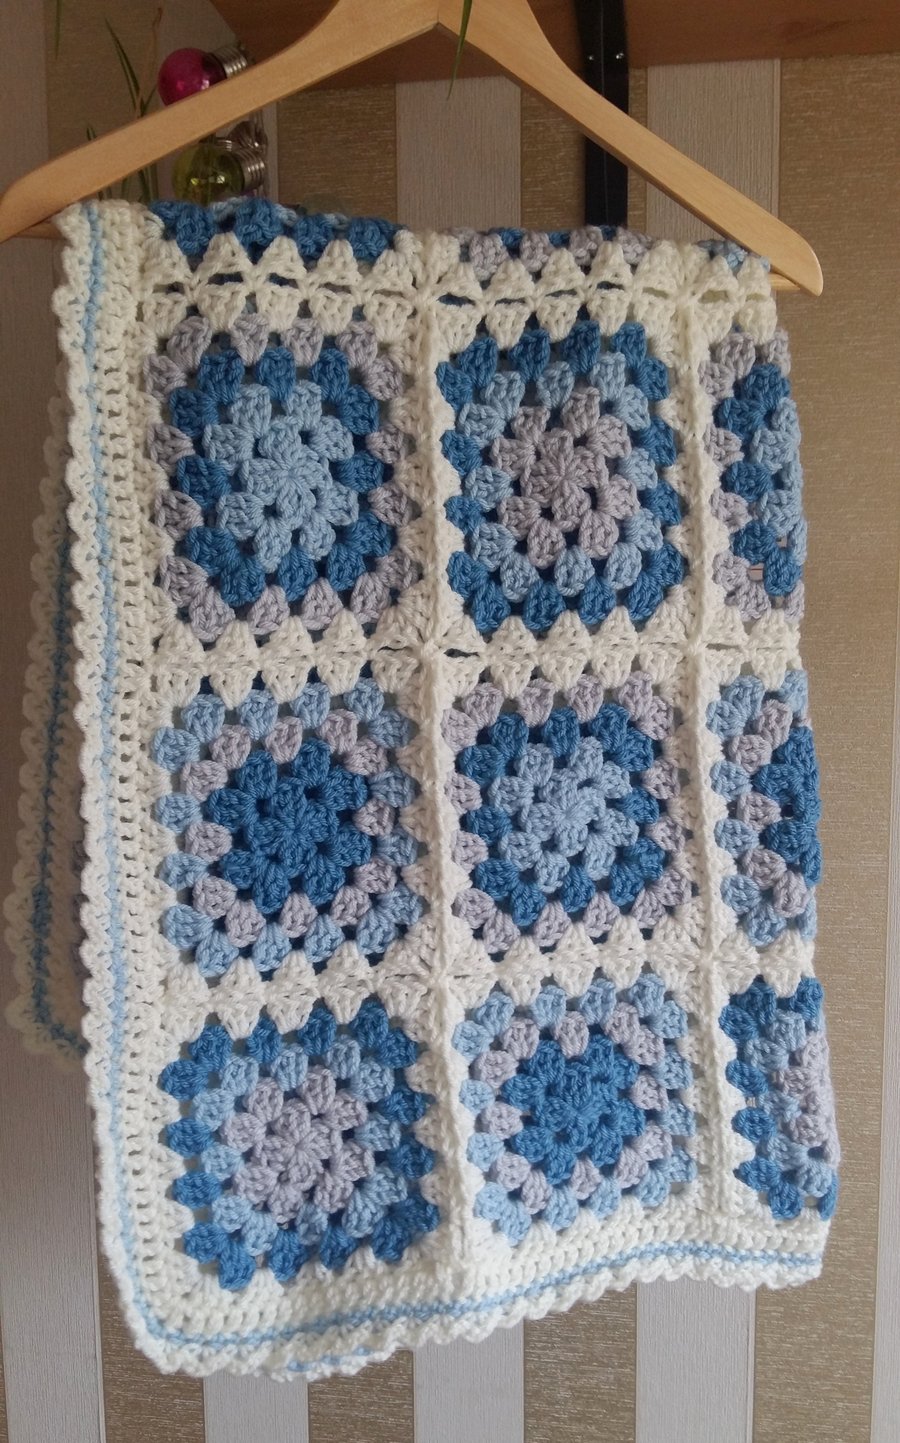 Handmade Crochet Baby Blanket. Pram, Cot, Crib, Car Seat, New Baby Gift Present